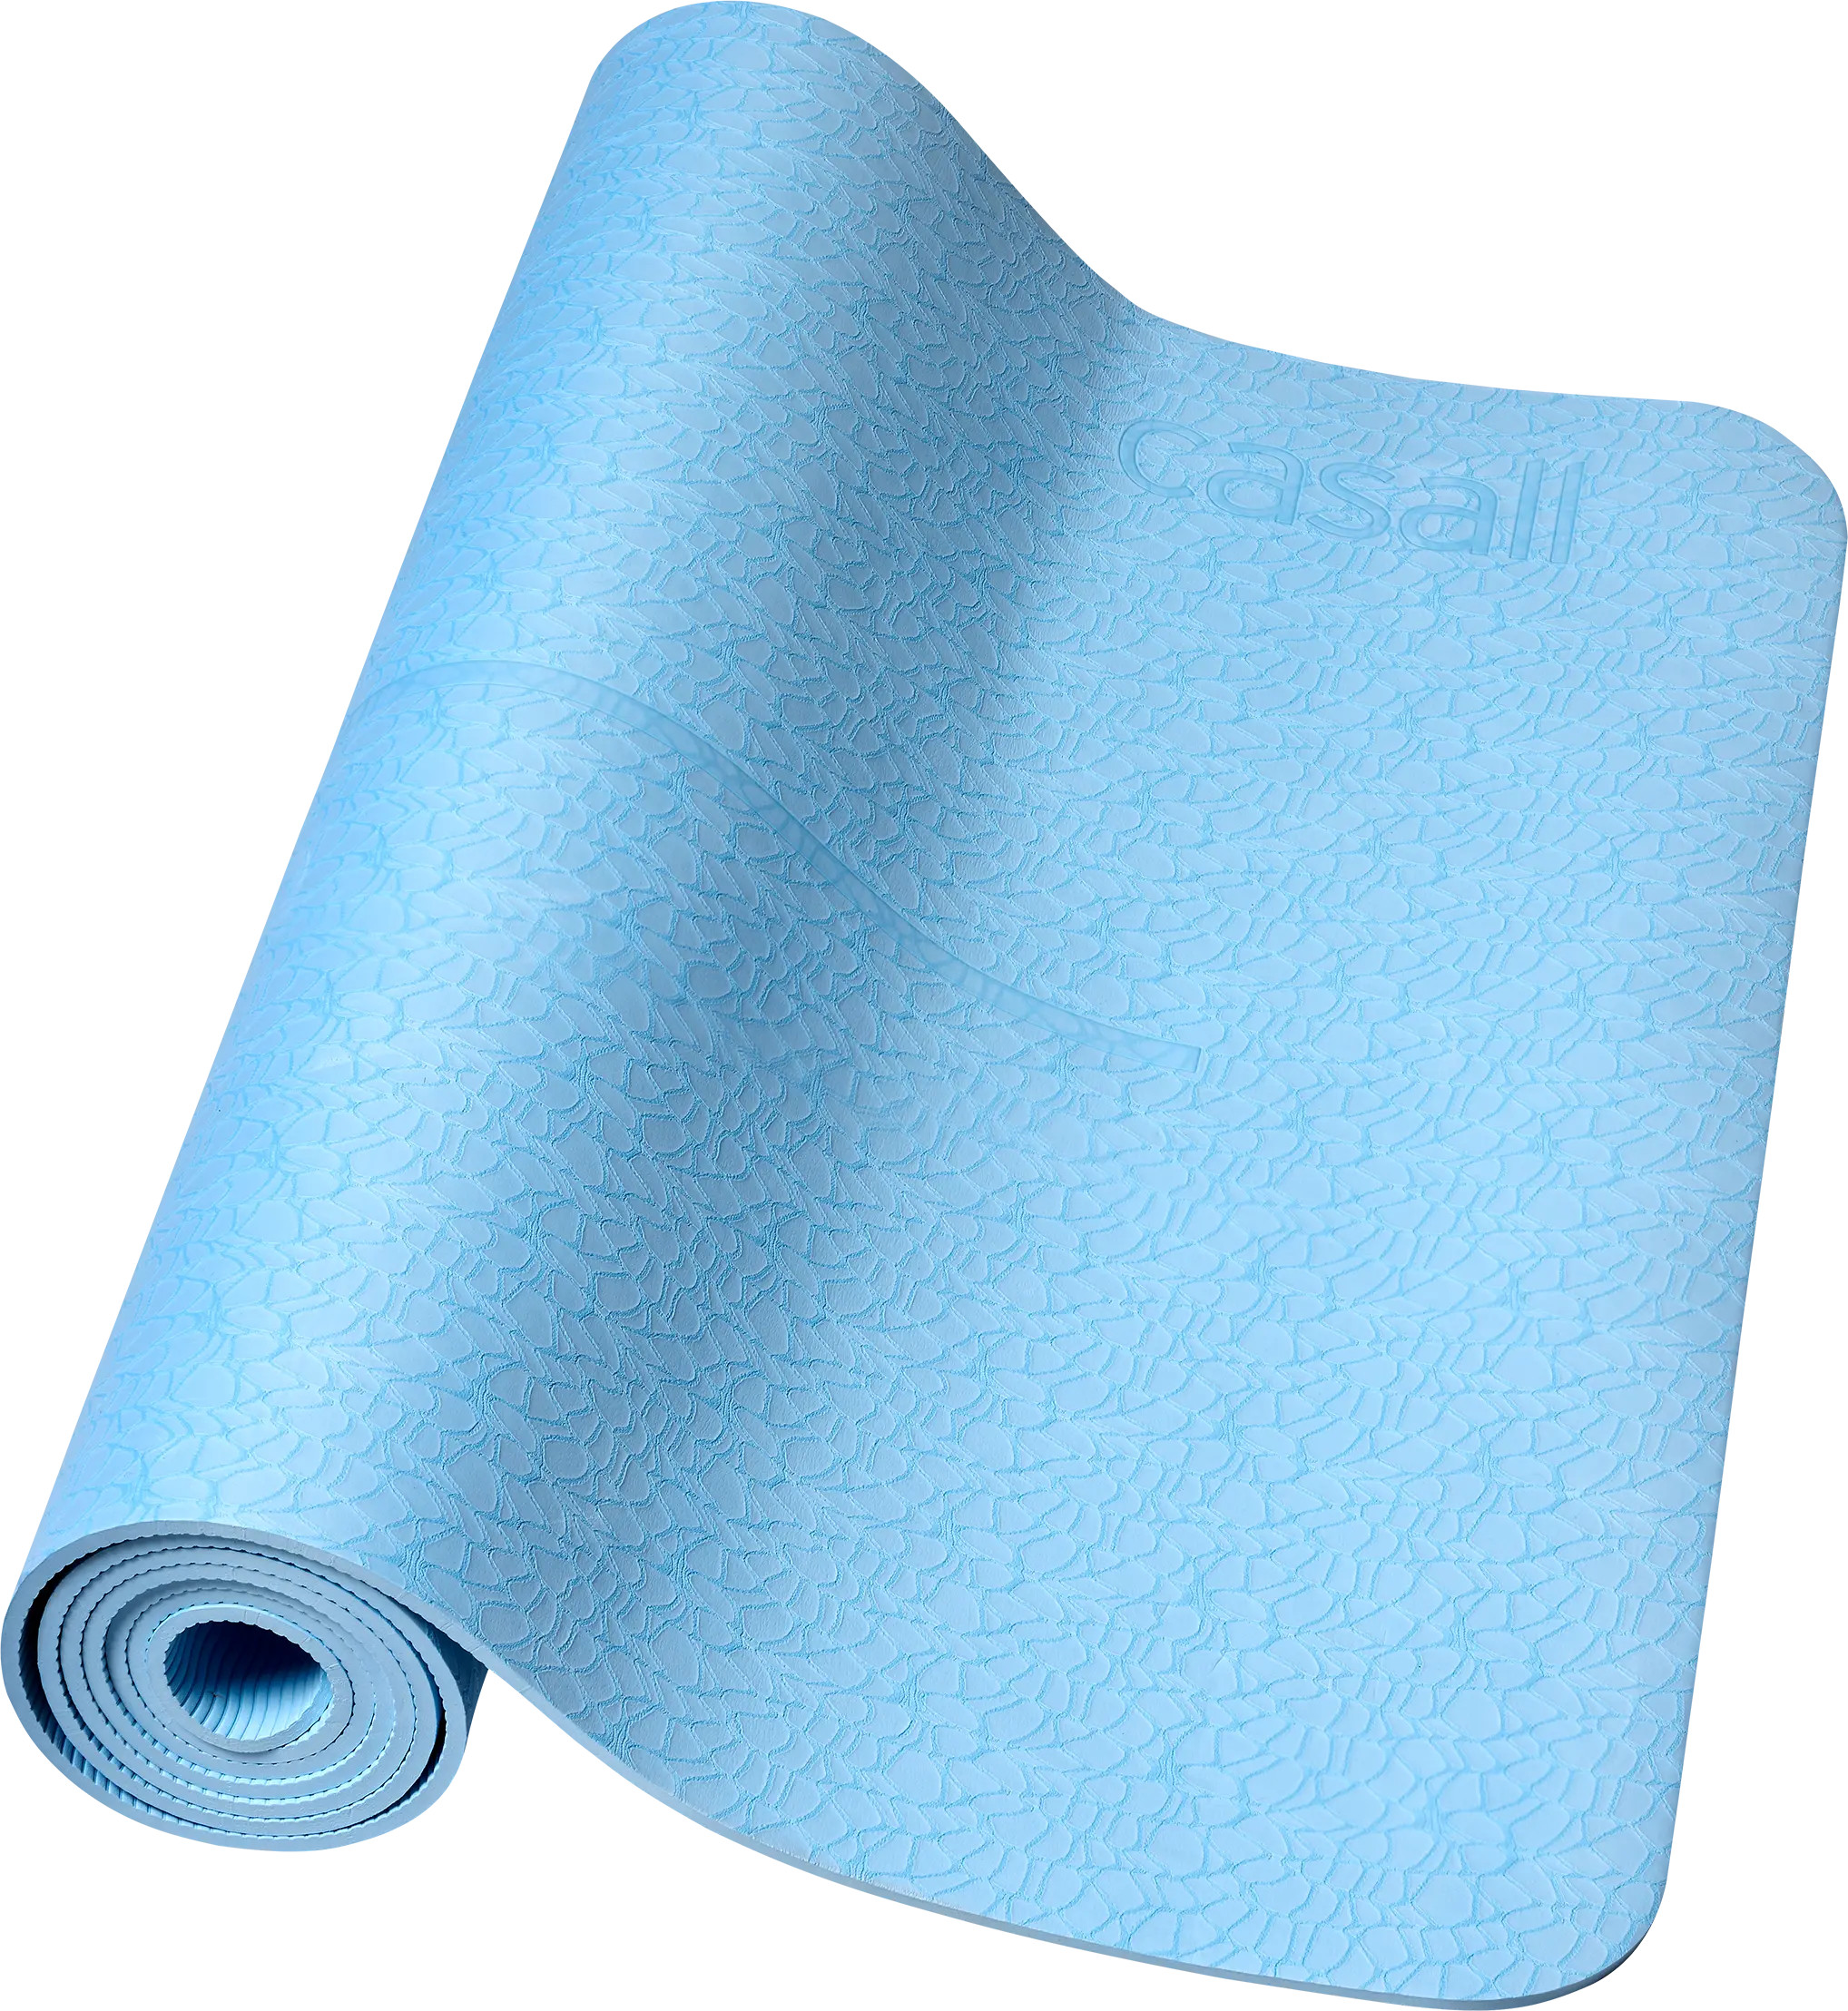 Casall Exercise Mat Cushion 5mm PVC Free Sky Blue OneSize, Sky Blue